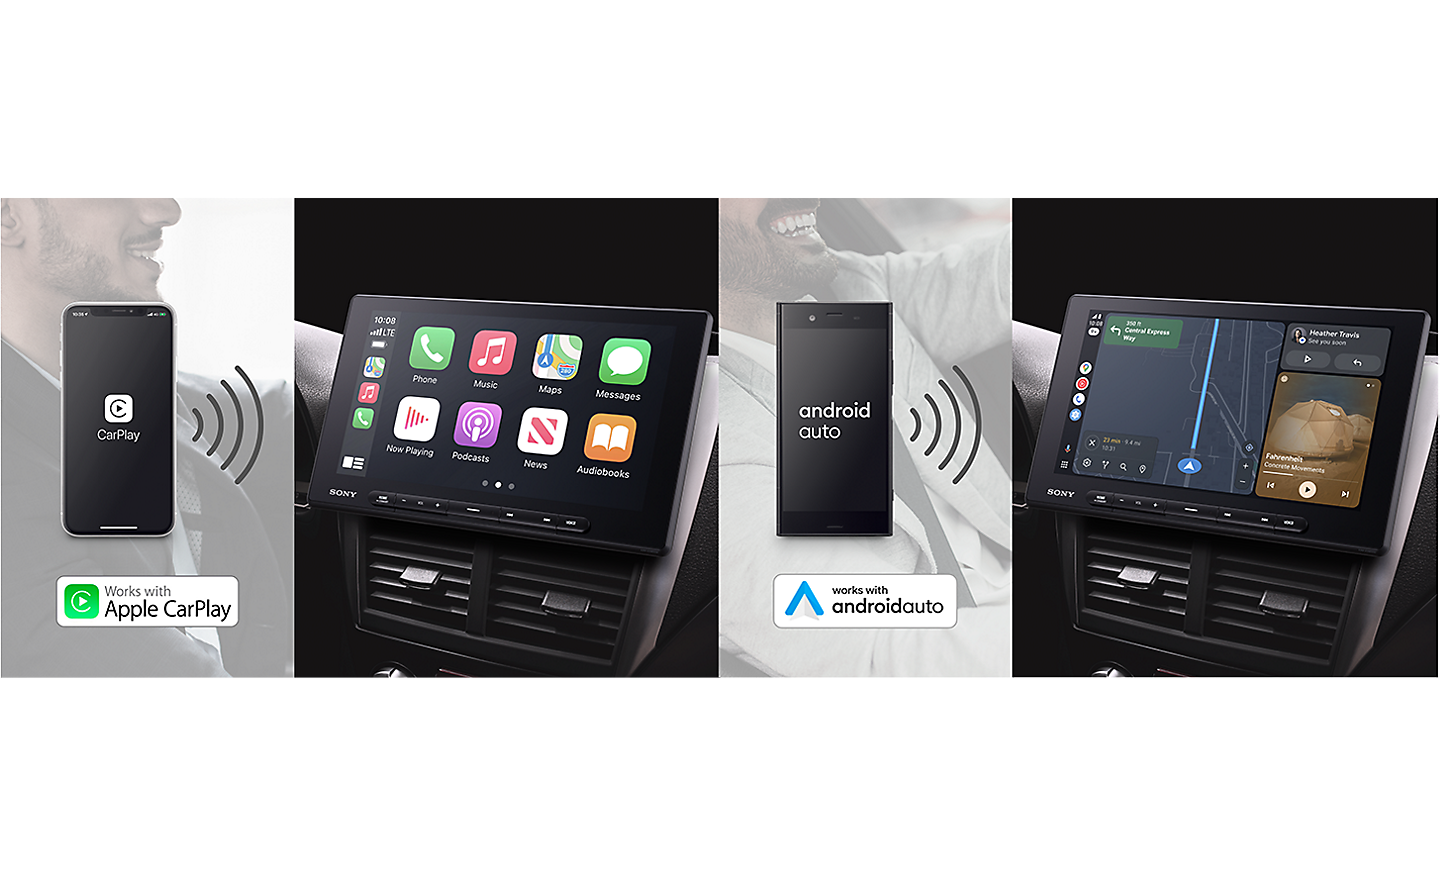 Imágenes del XAV-AX8500 conectado a través de Wi-Fi tanto a Apple CarPlay como a Android Auto